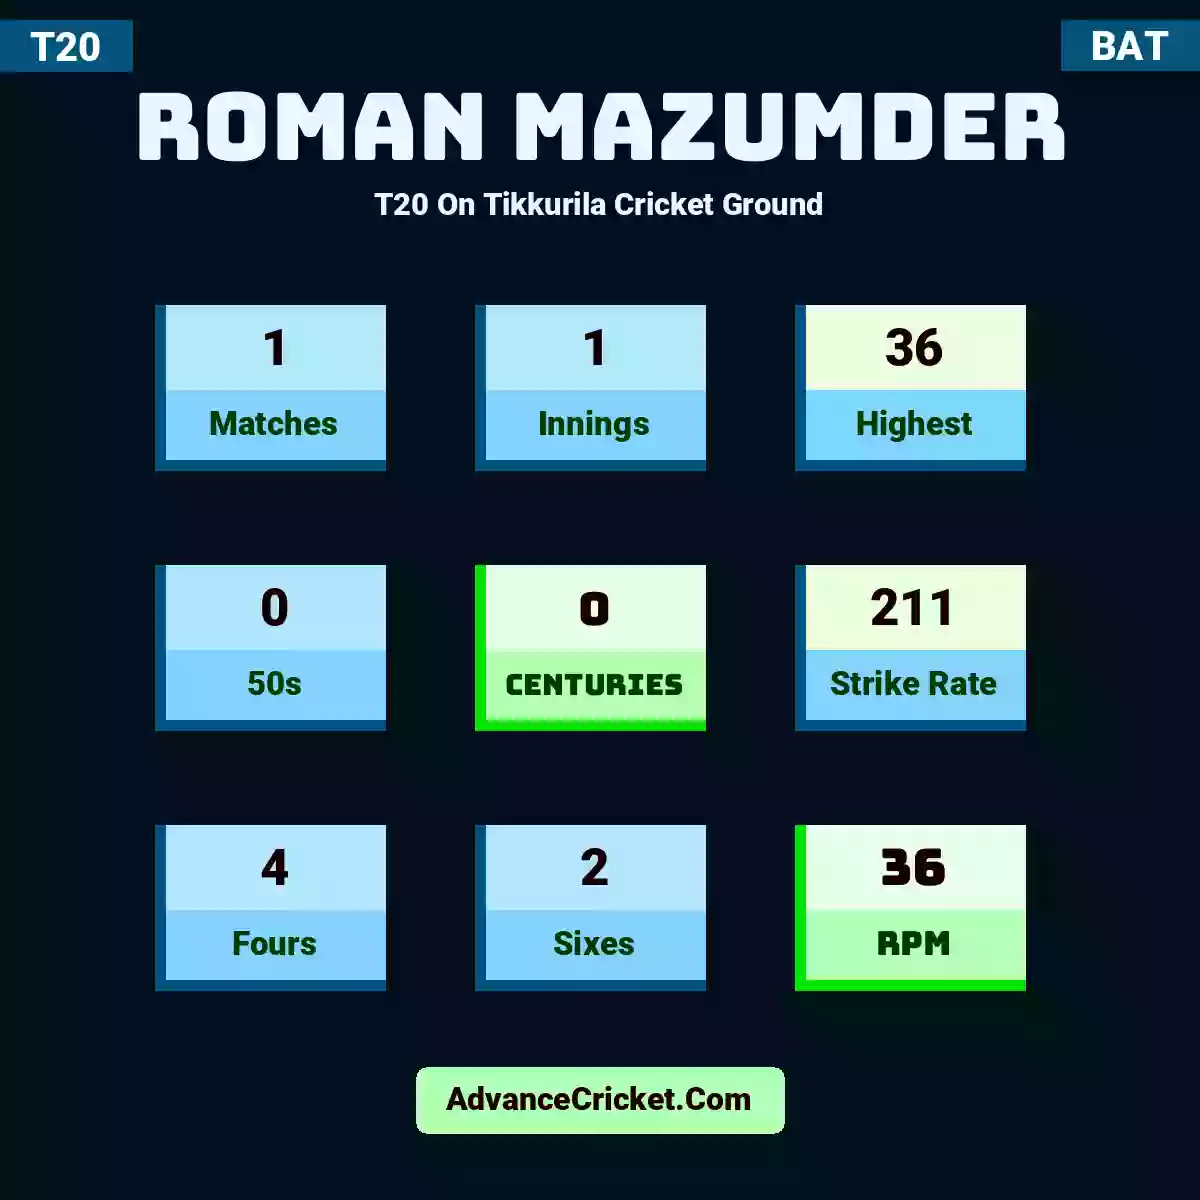 Roman Mazumder T20  On Tikkurila Cricket Ground, Roman Mazumder played 1 matches, scored 36 runs as highest, 0 half-centuries, and 0 centuries, with a strike rate of 211. R.Mazumder hit 4 fours and 2 sixes, with an RPM of 36.